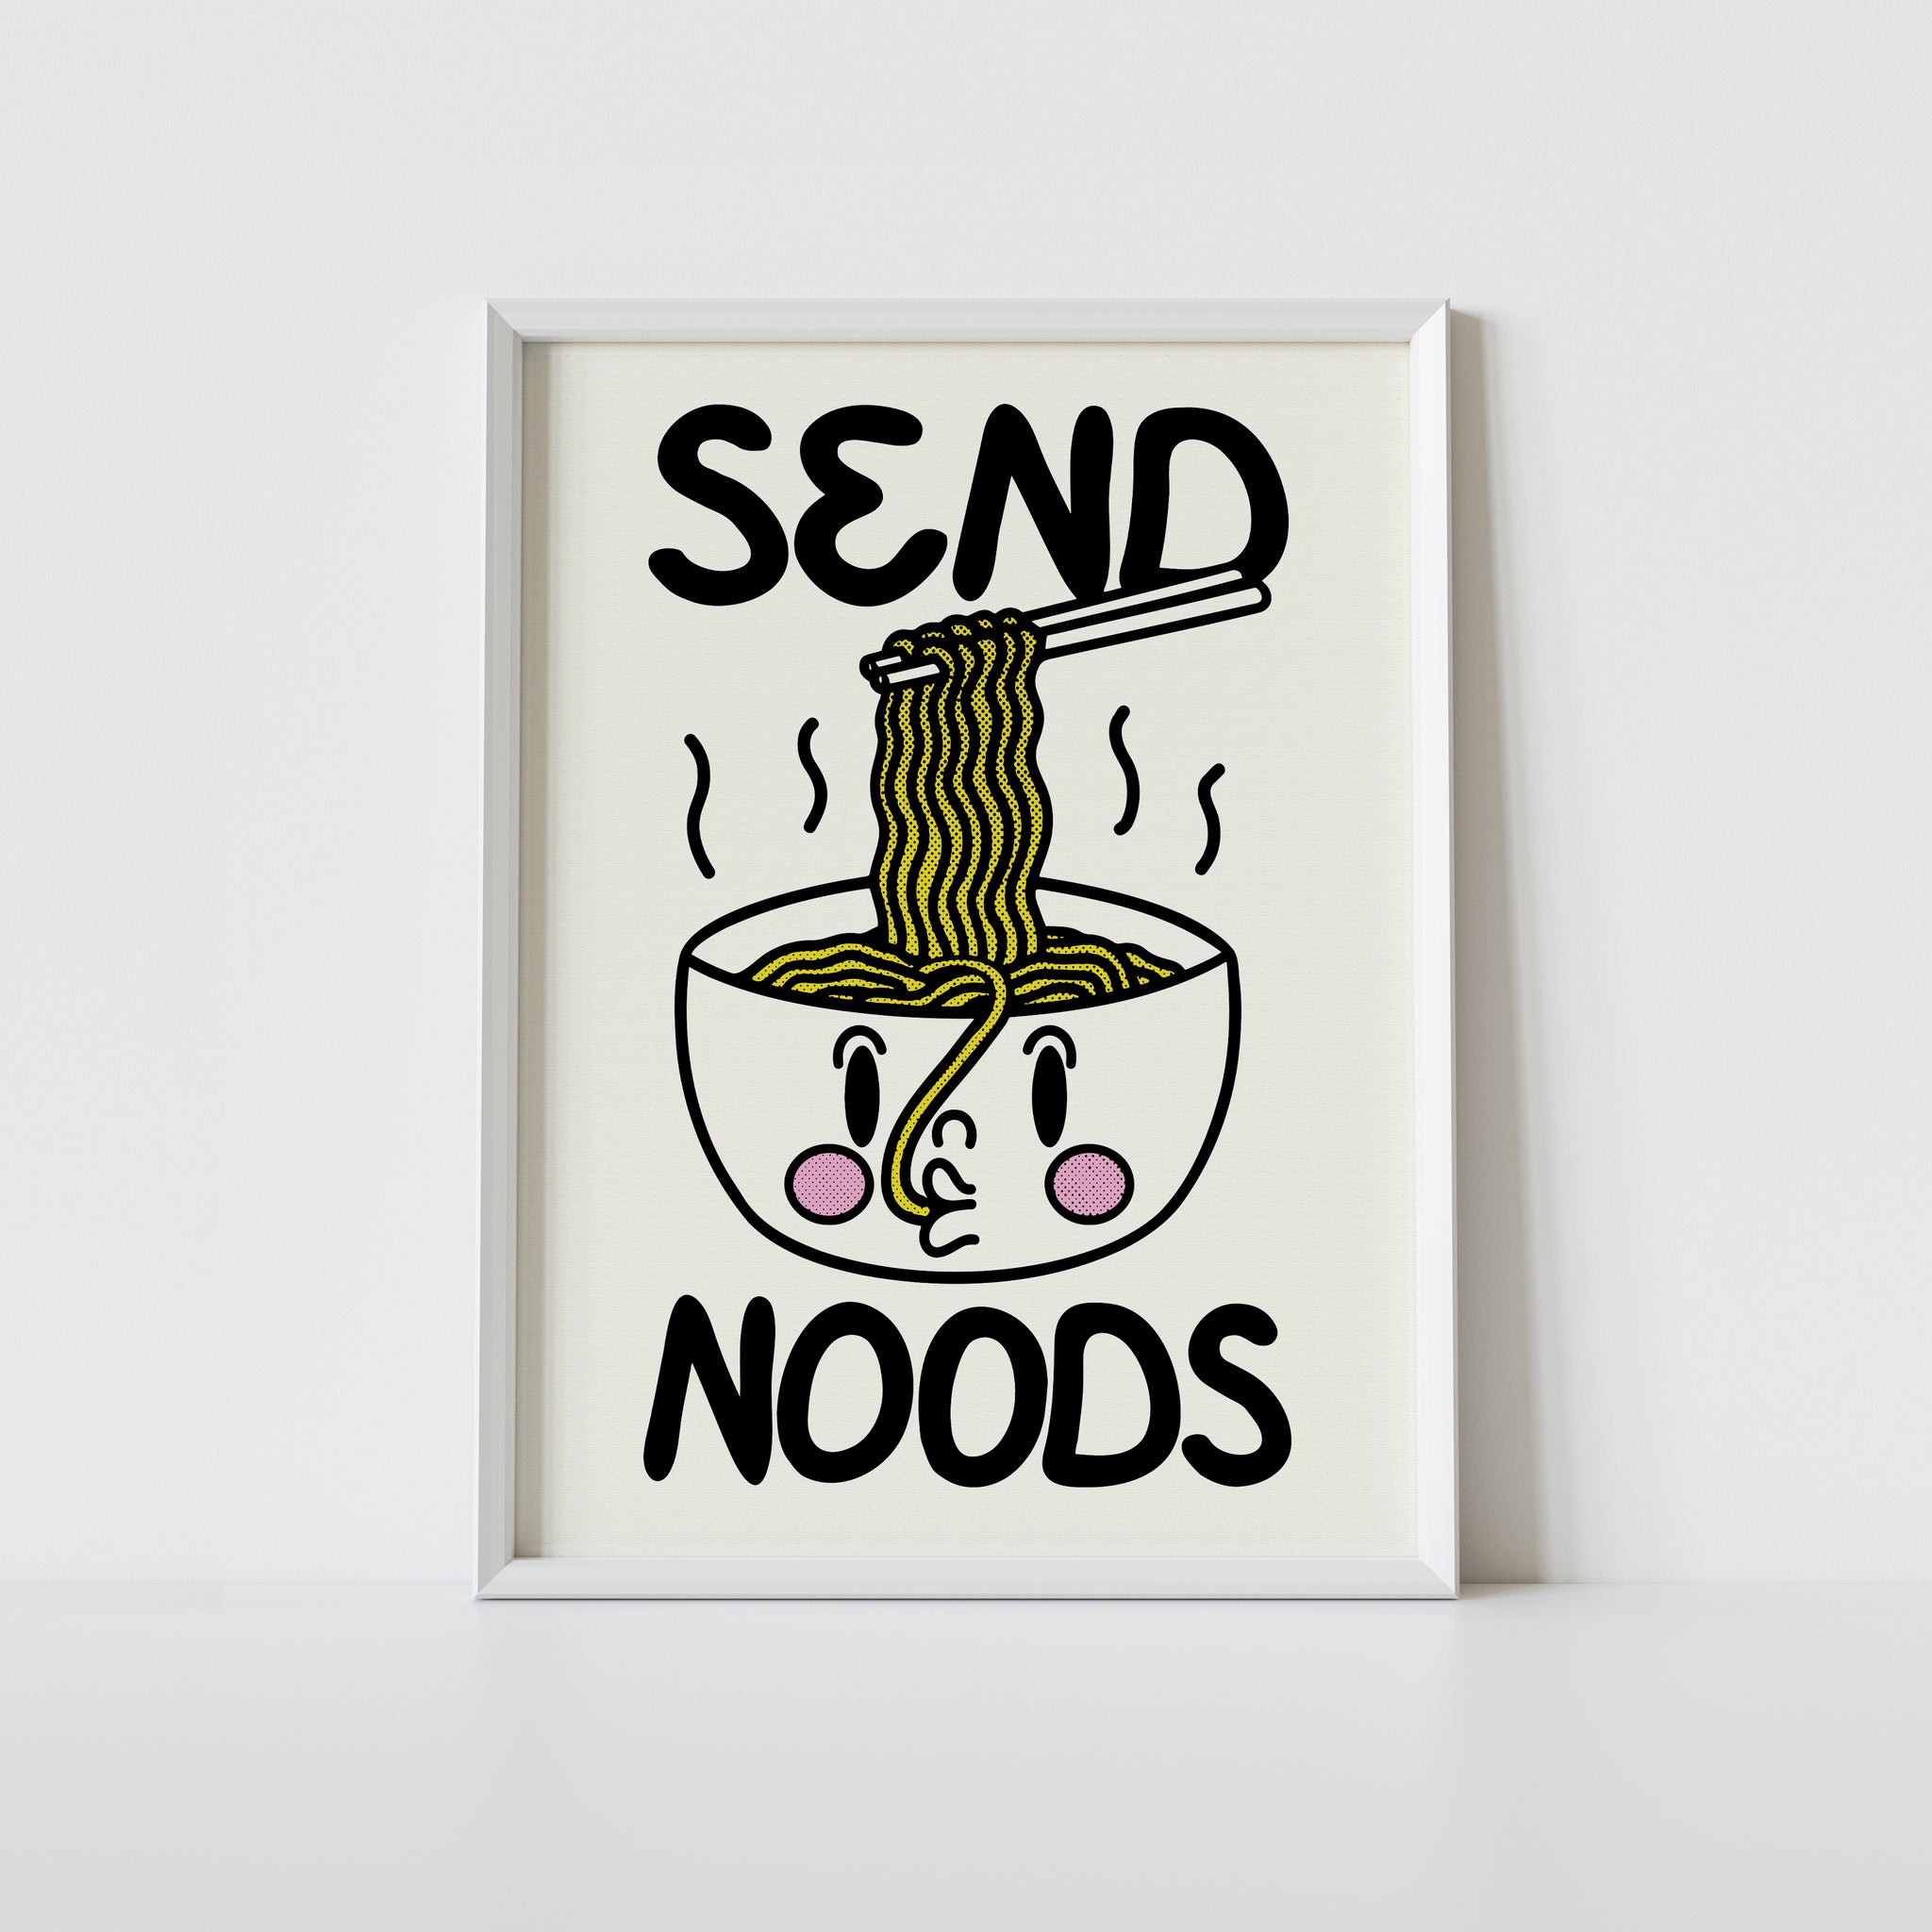 'Send Noods' print